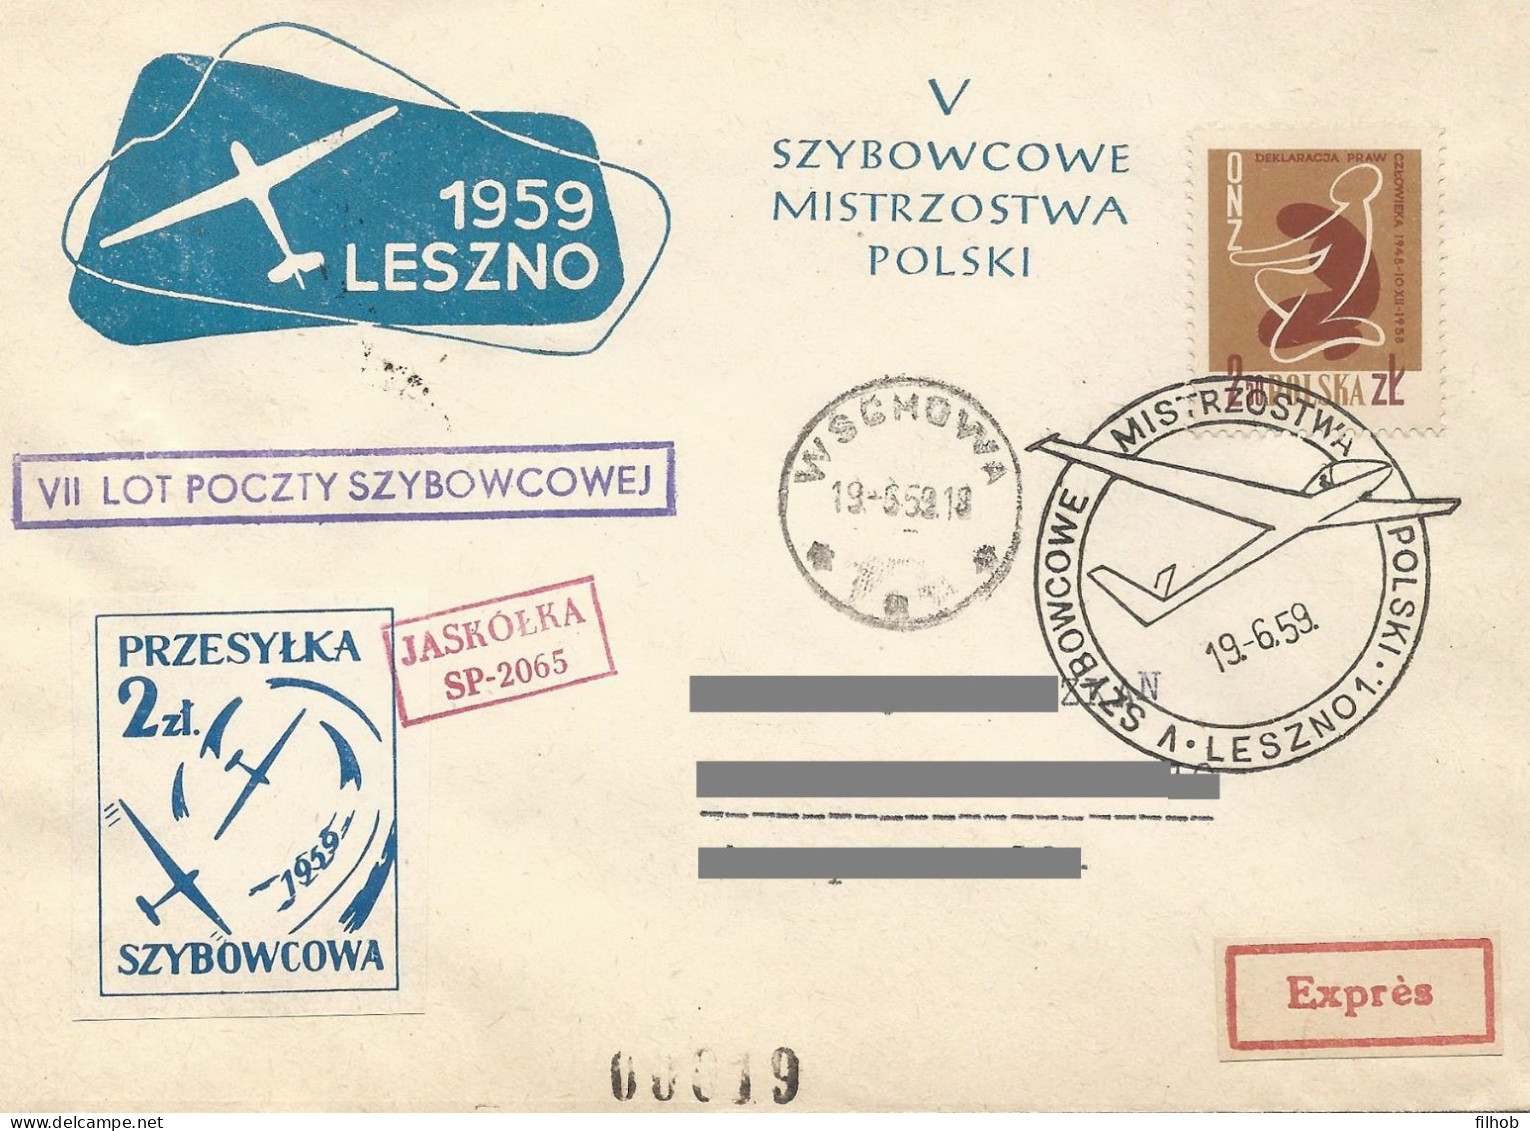 Poland Post - Glider PSZ.1959.lesz.06: Sport Leszno Polish Championships Jaskolka - Gleitflieger